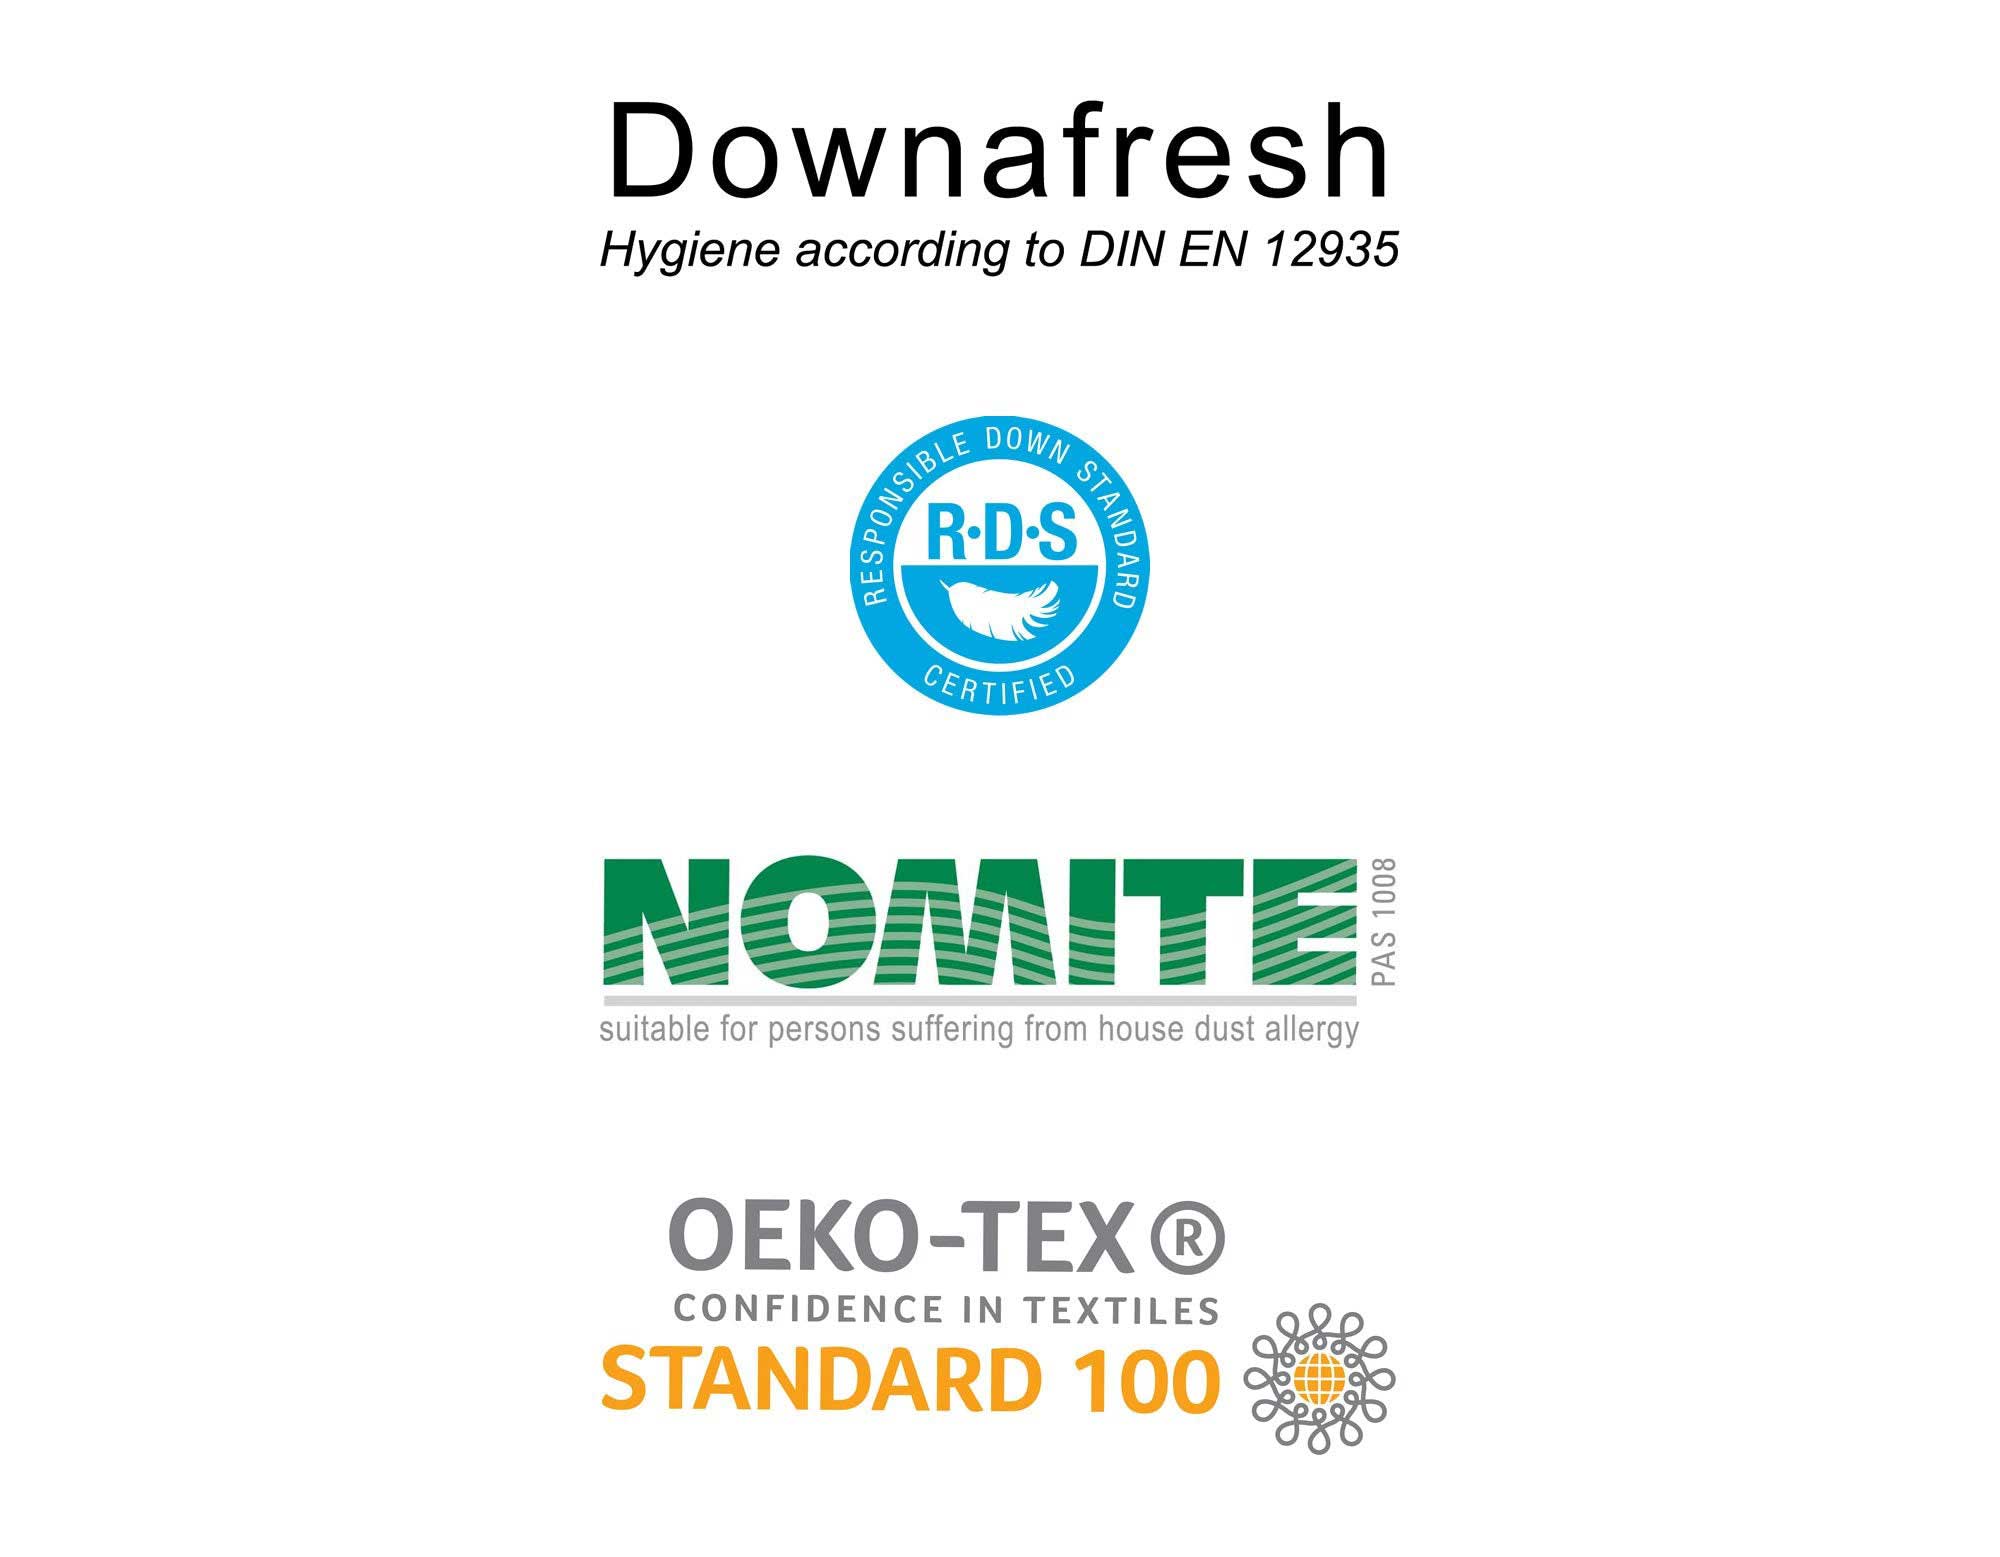 Duvet certification logos Downafresh, Responsible Down Standard, Nomite and Oeko-Tex for scooms superking 4.5 tog duvet